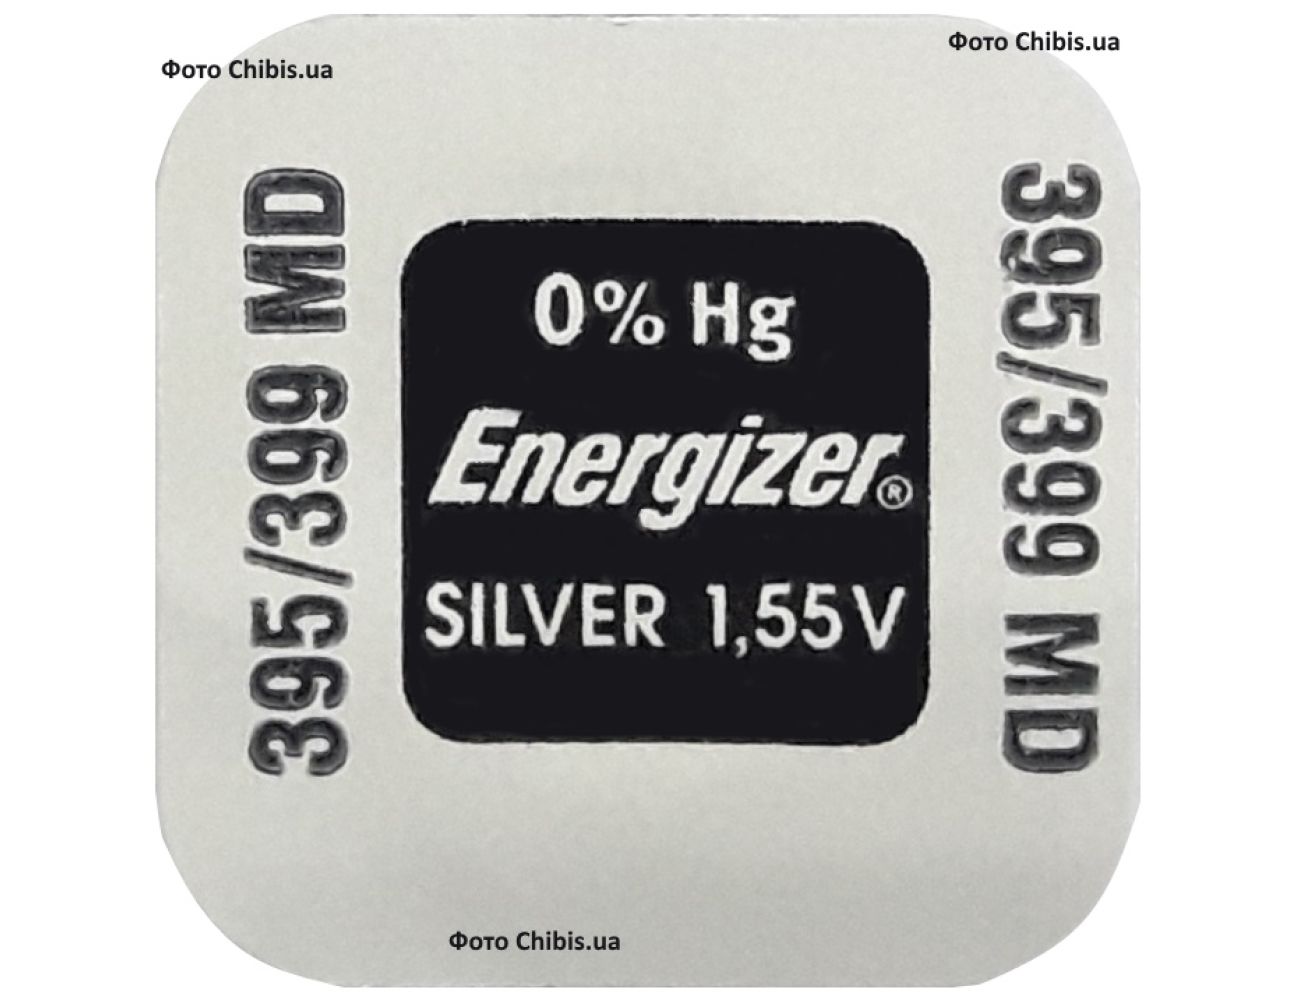 Батарейка SR927W / 395 / 399 Energizer 1.55V Silver Oxide 1 шт.